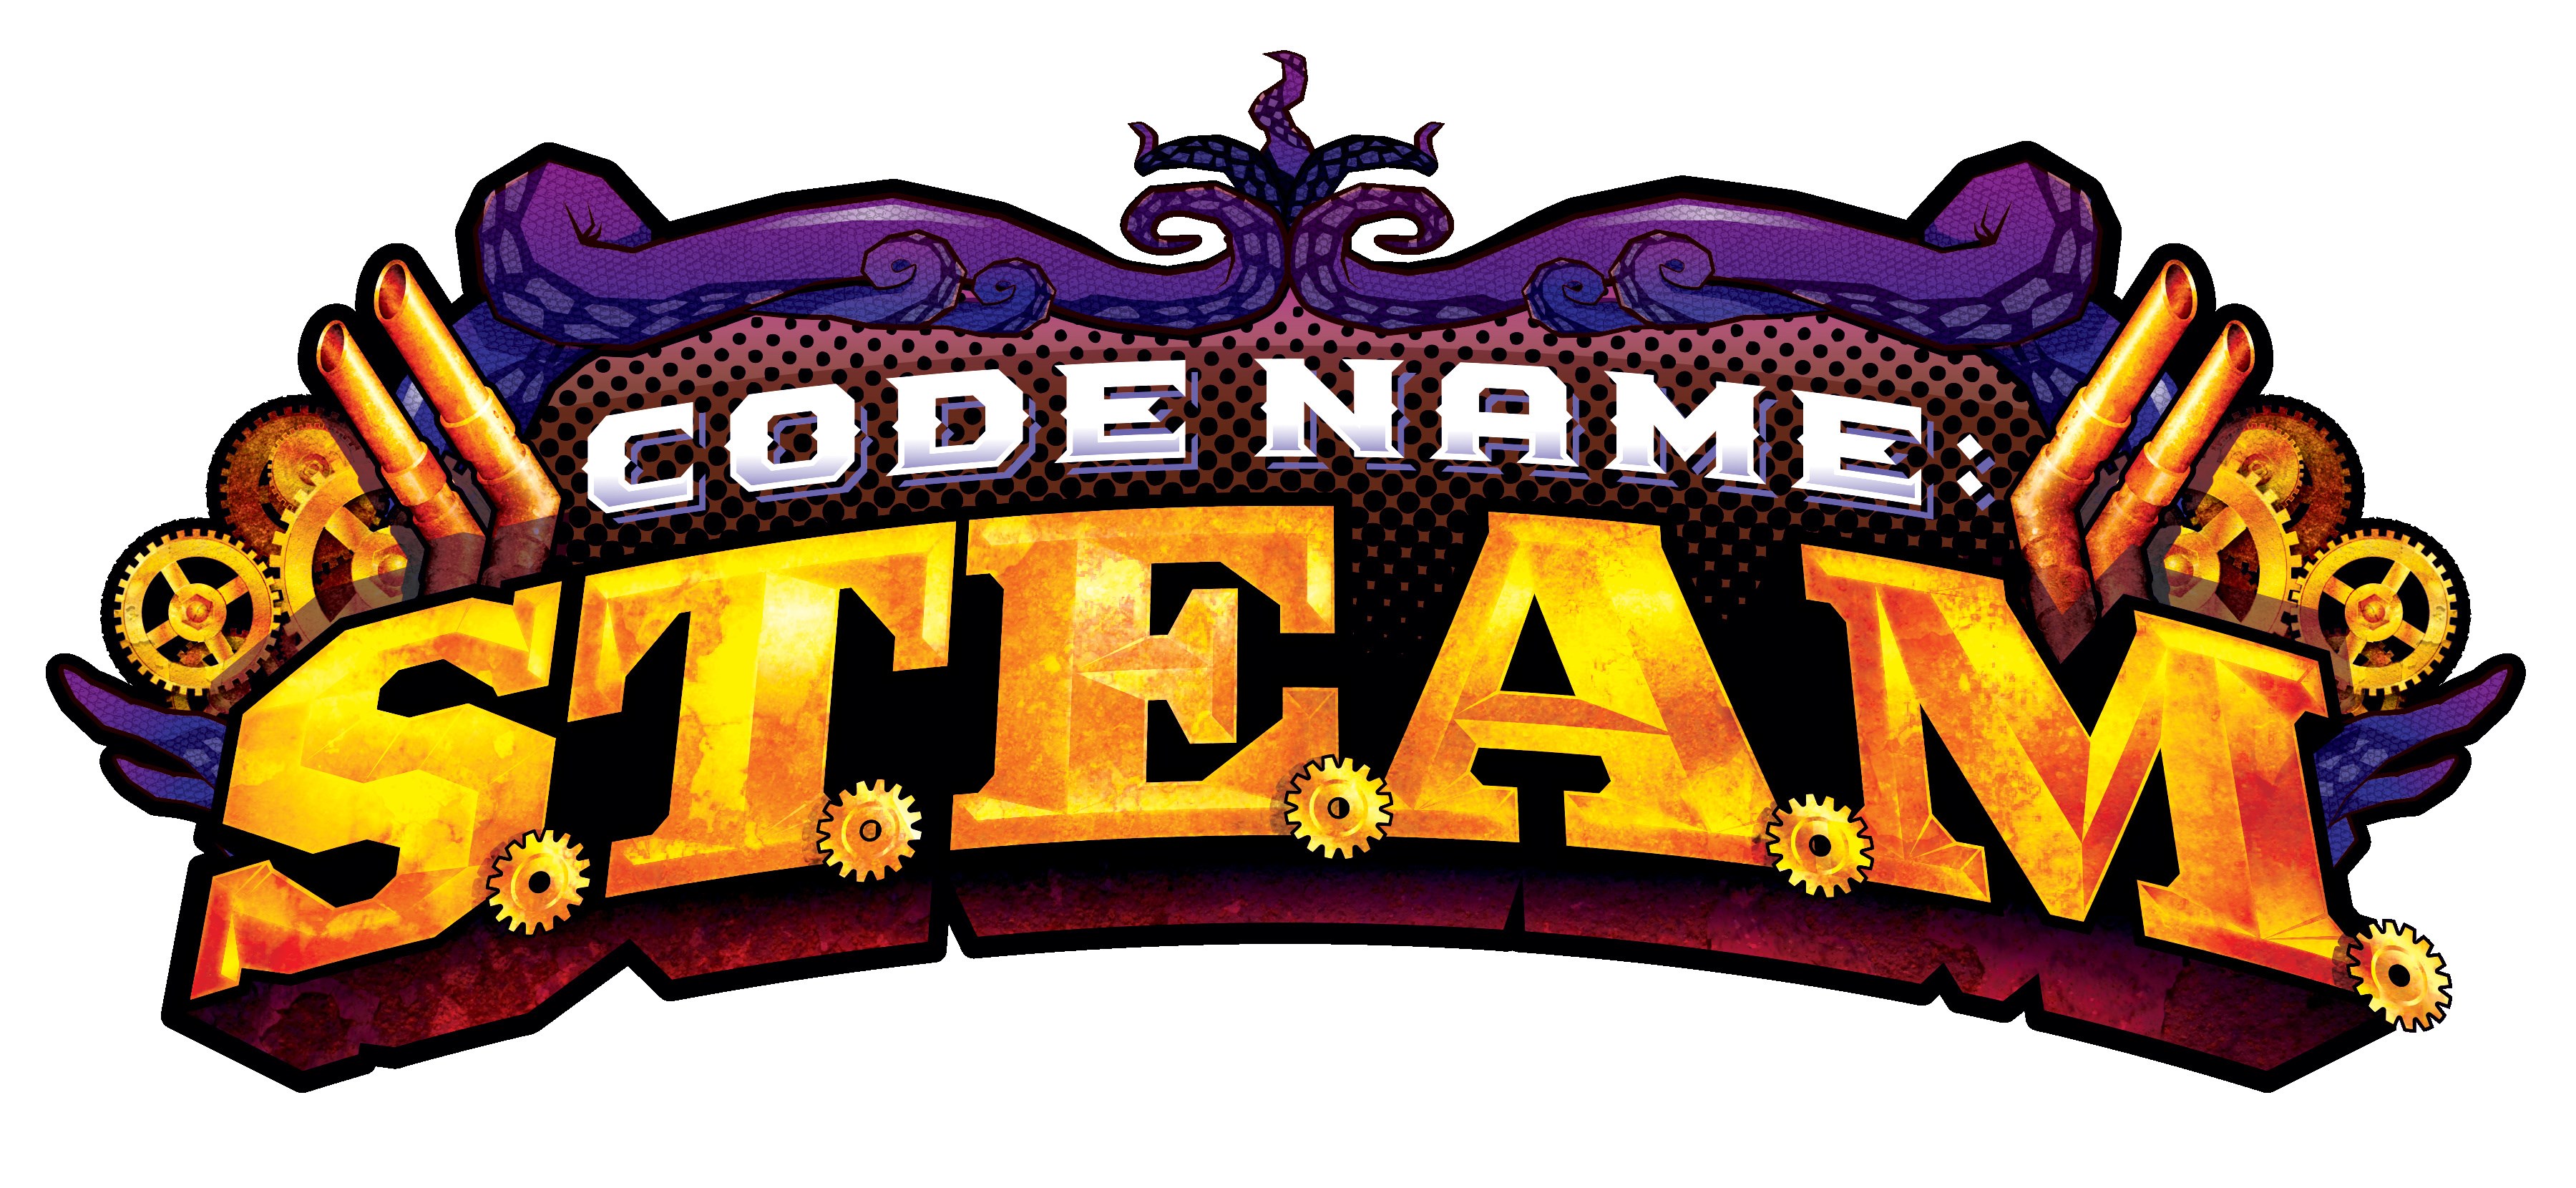 N3DS_CodeNameSTEAM_Logo.jpg